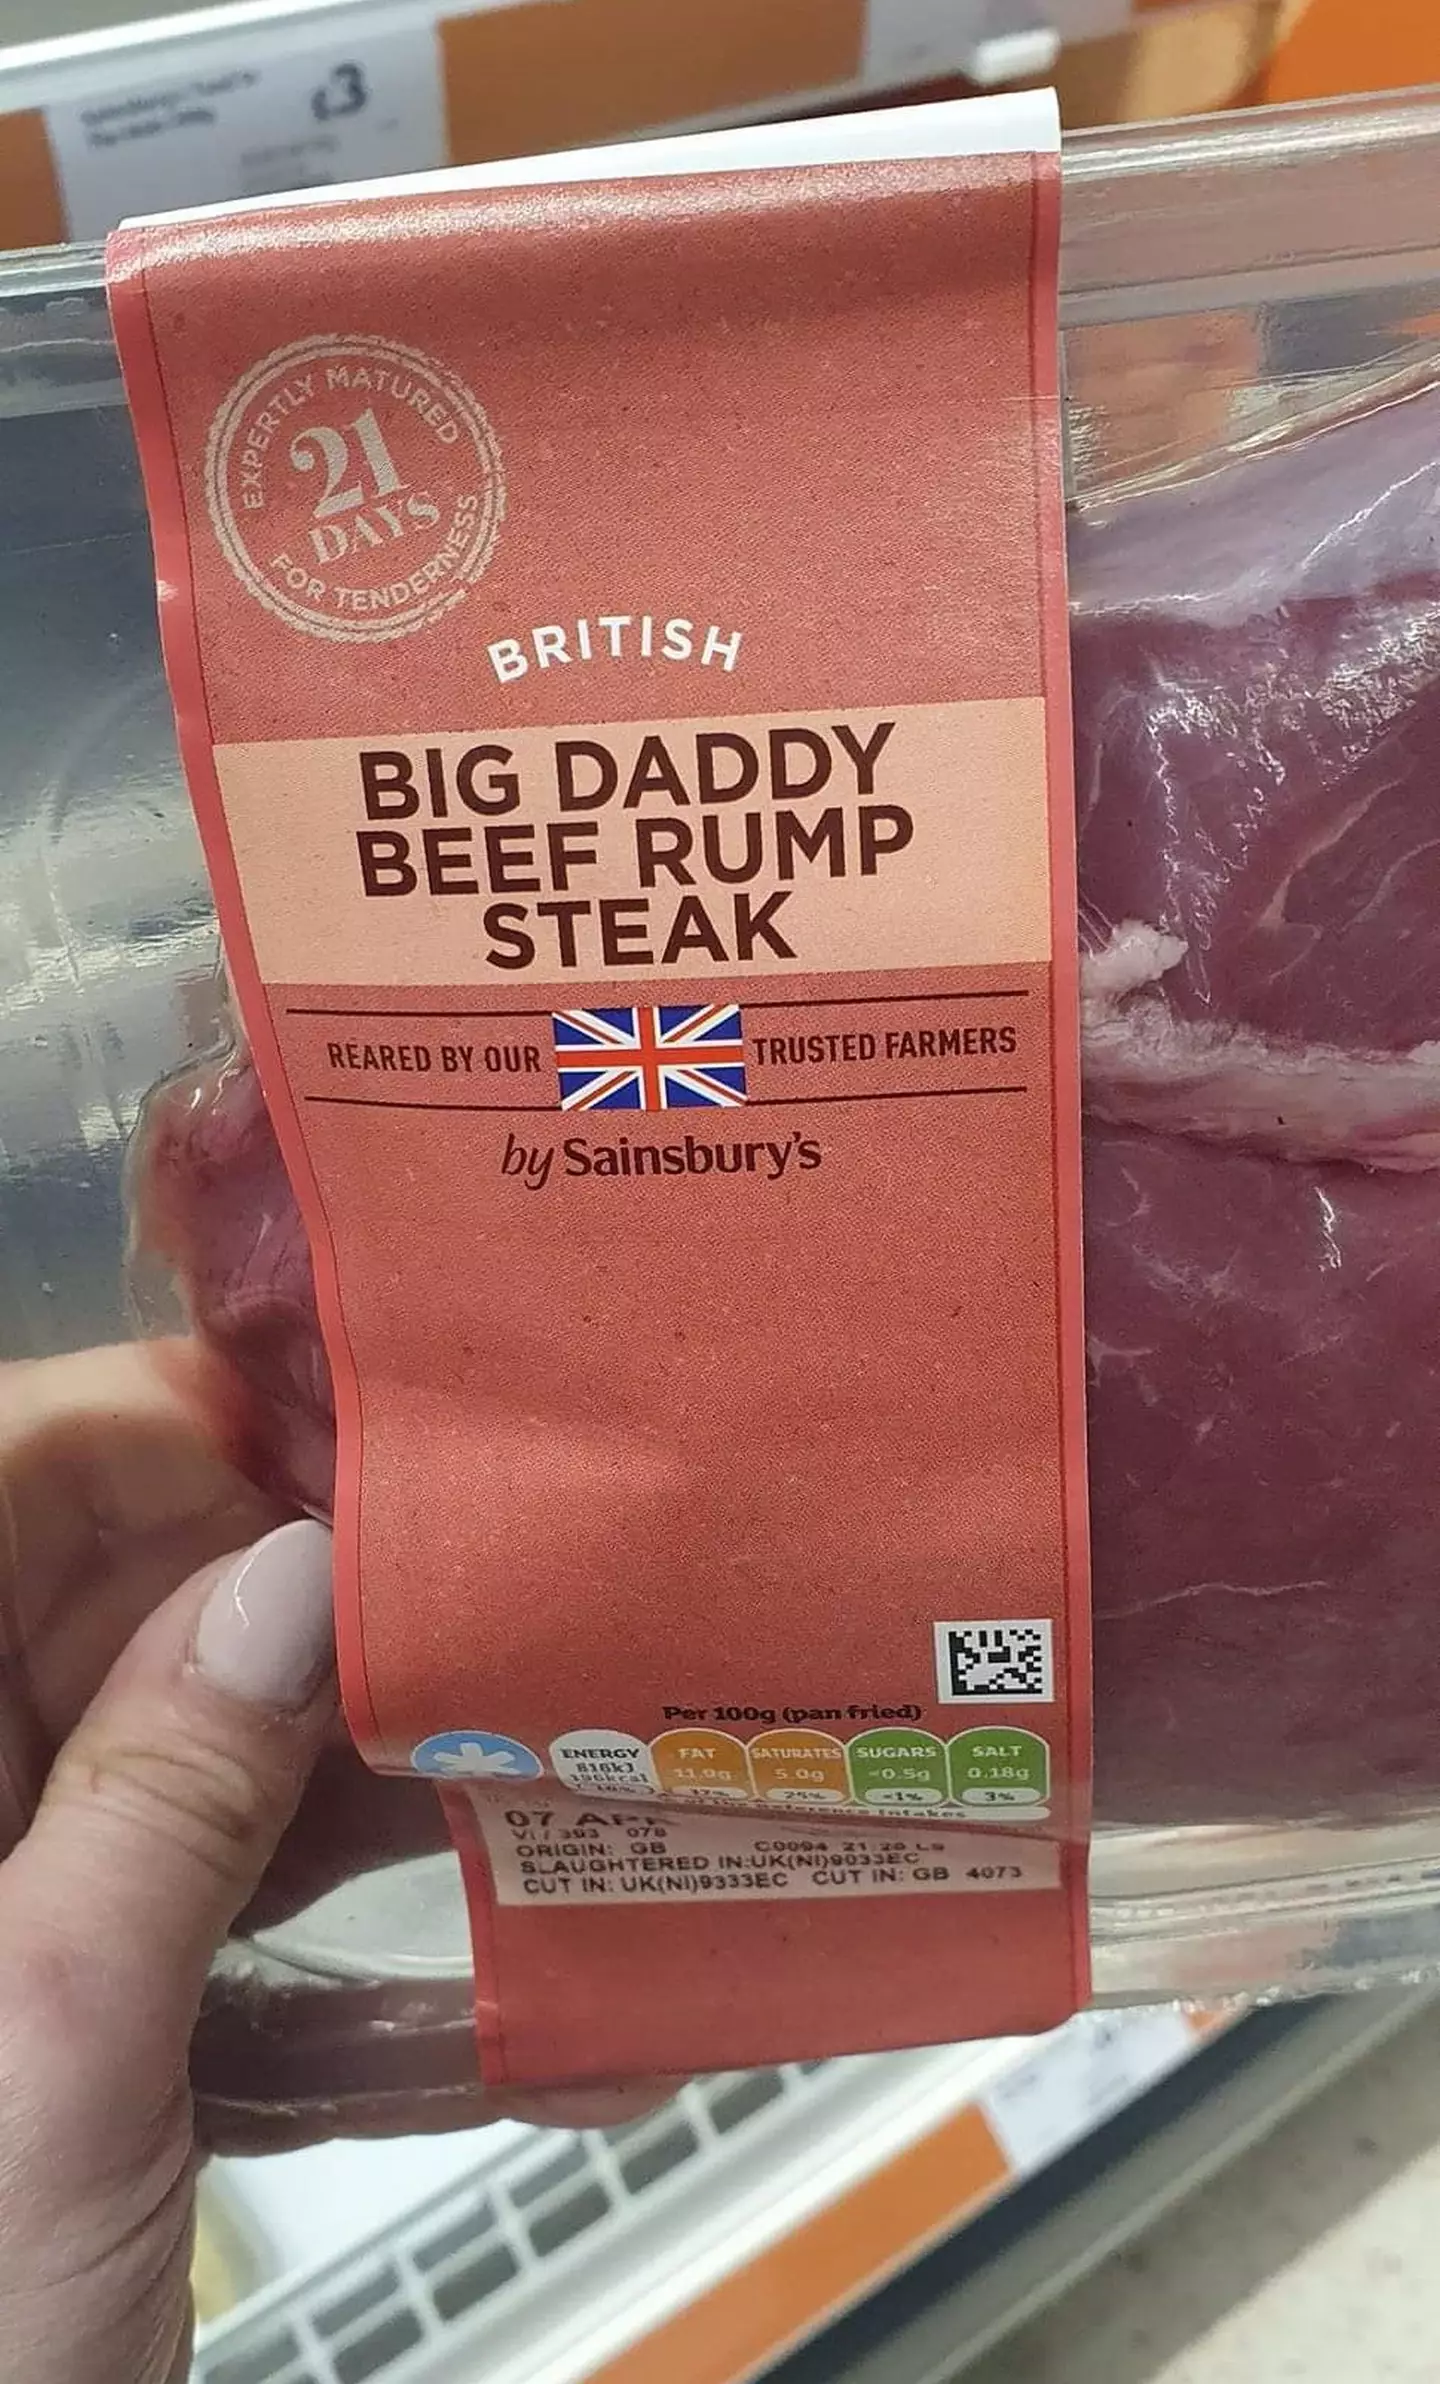 Sainsbury's 'Big Daddy Beef Rump Steak'.